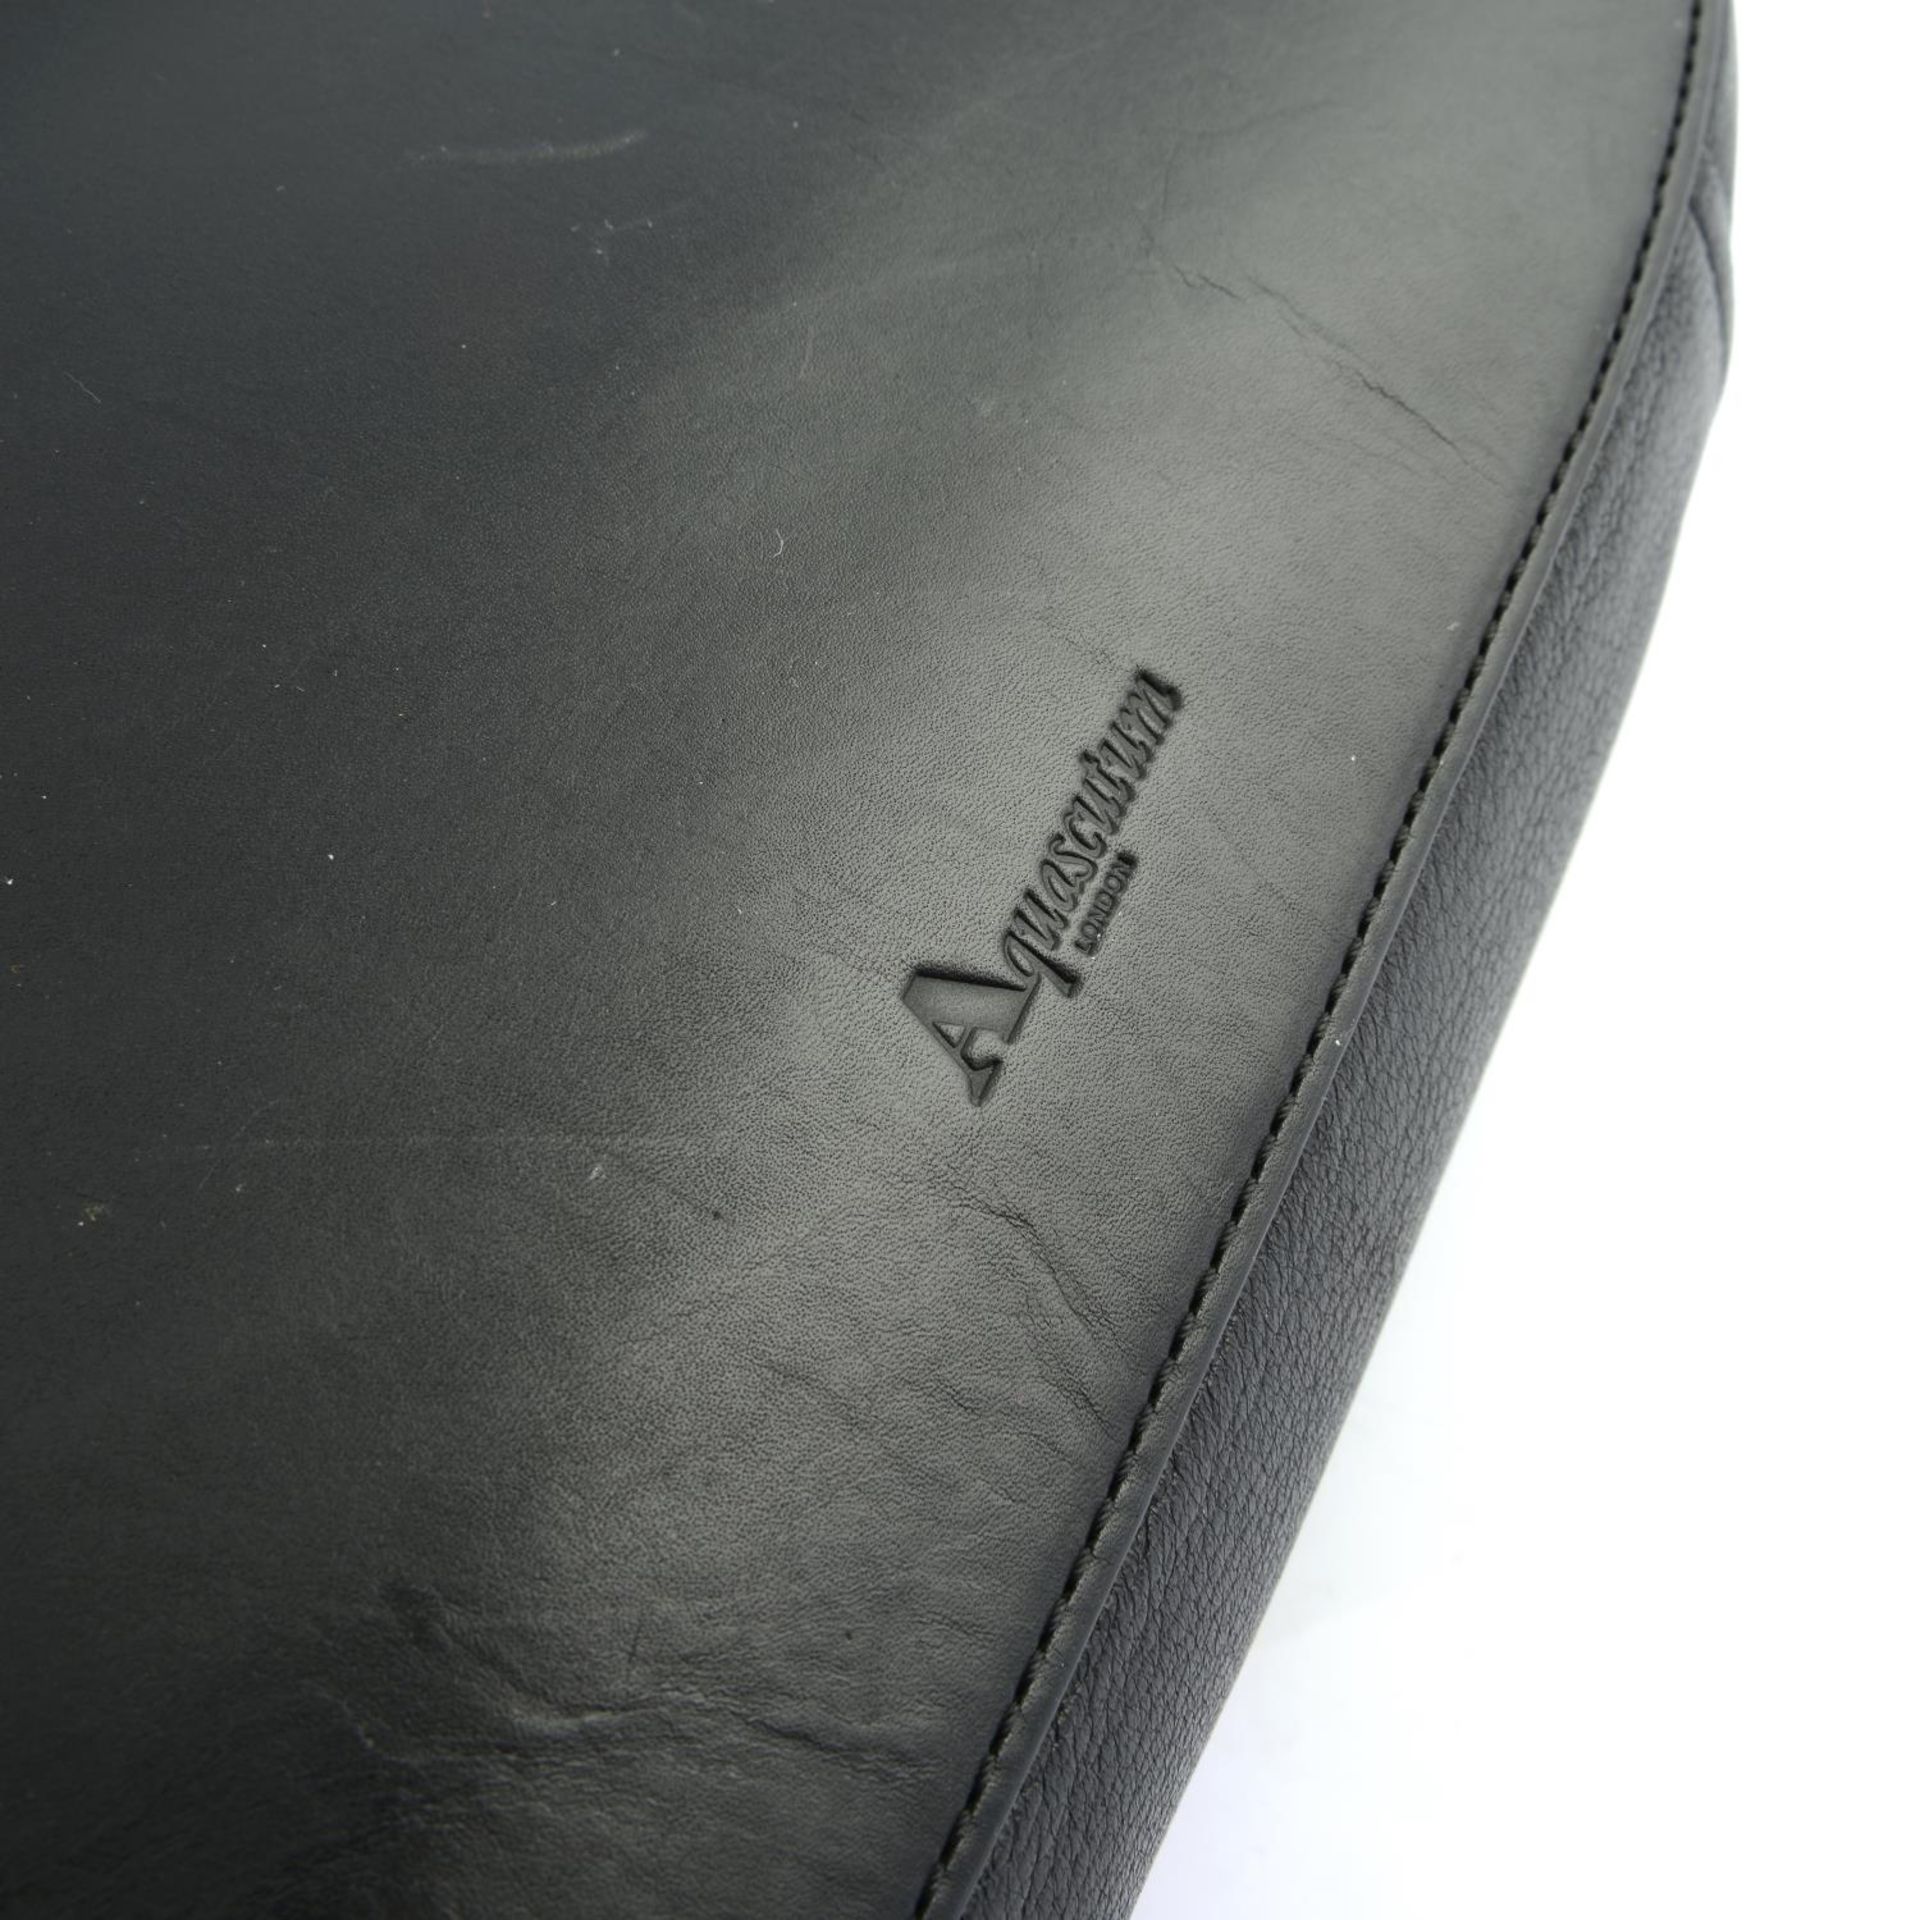 AQUASCUTUM - a black leather satchel. - Image 6 of 6